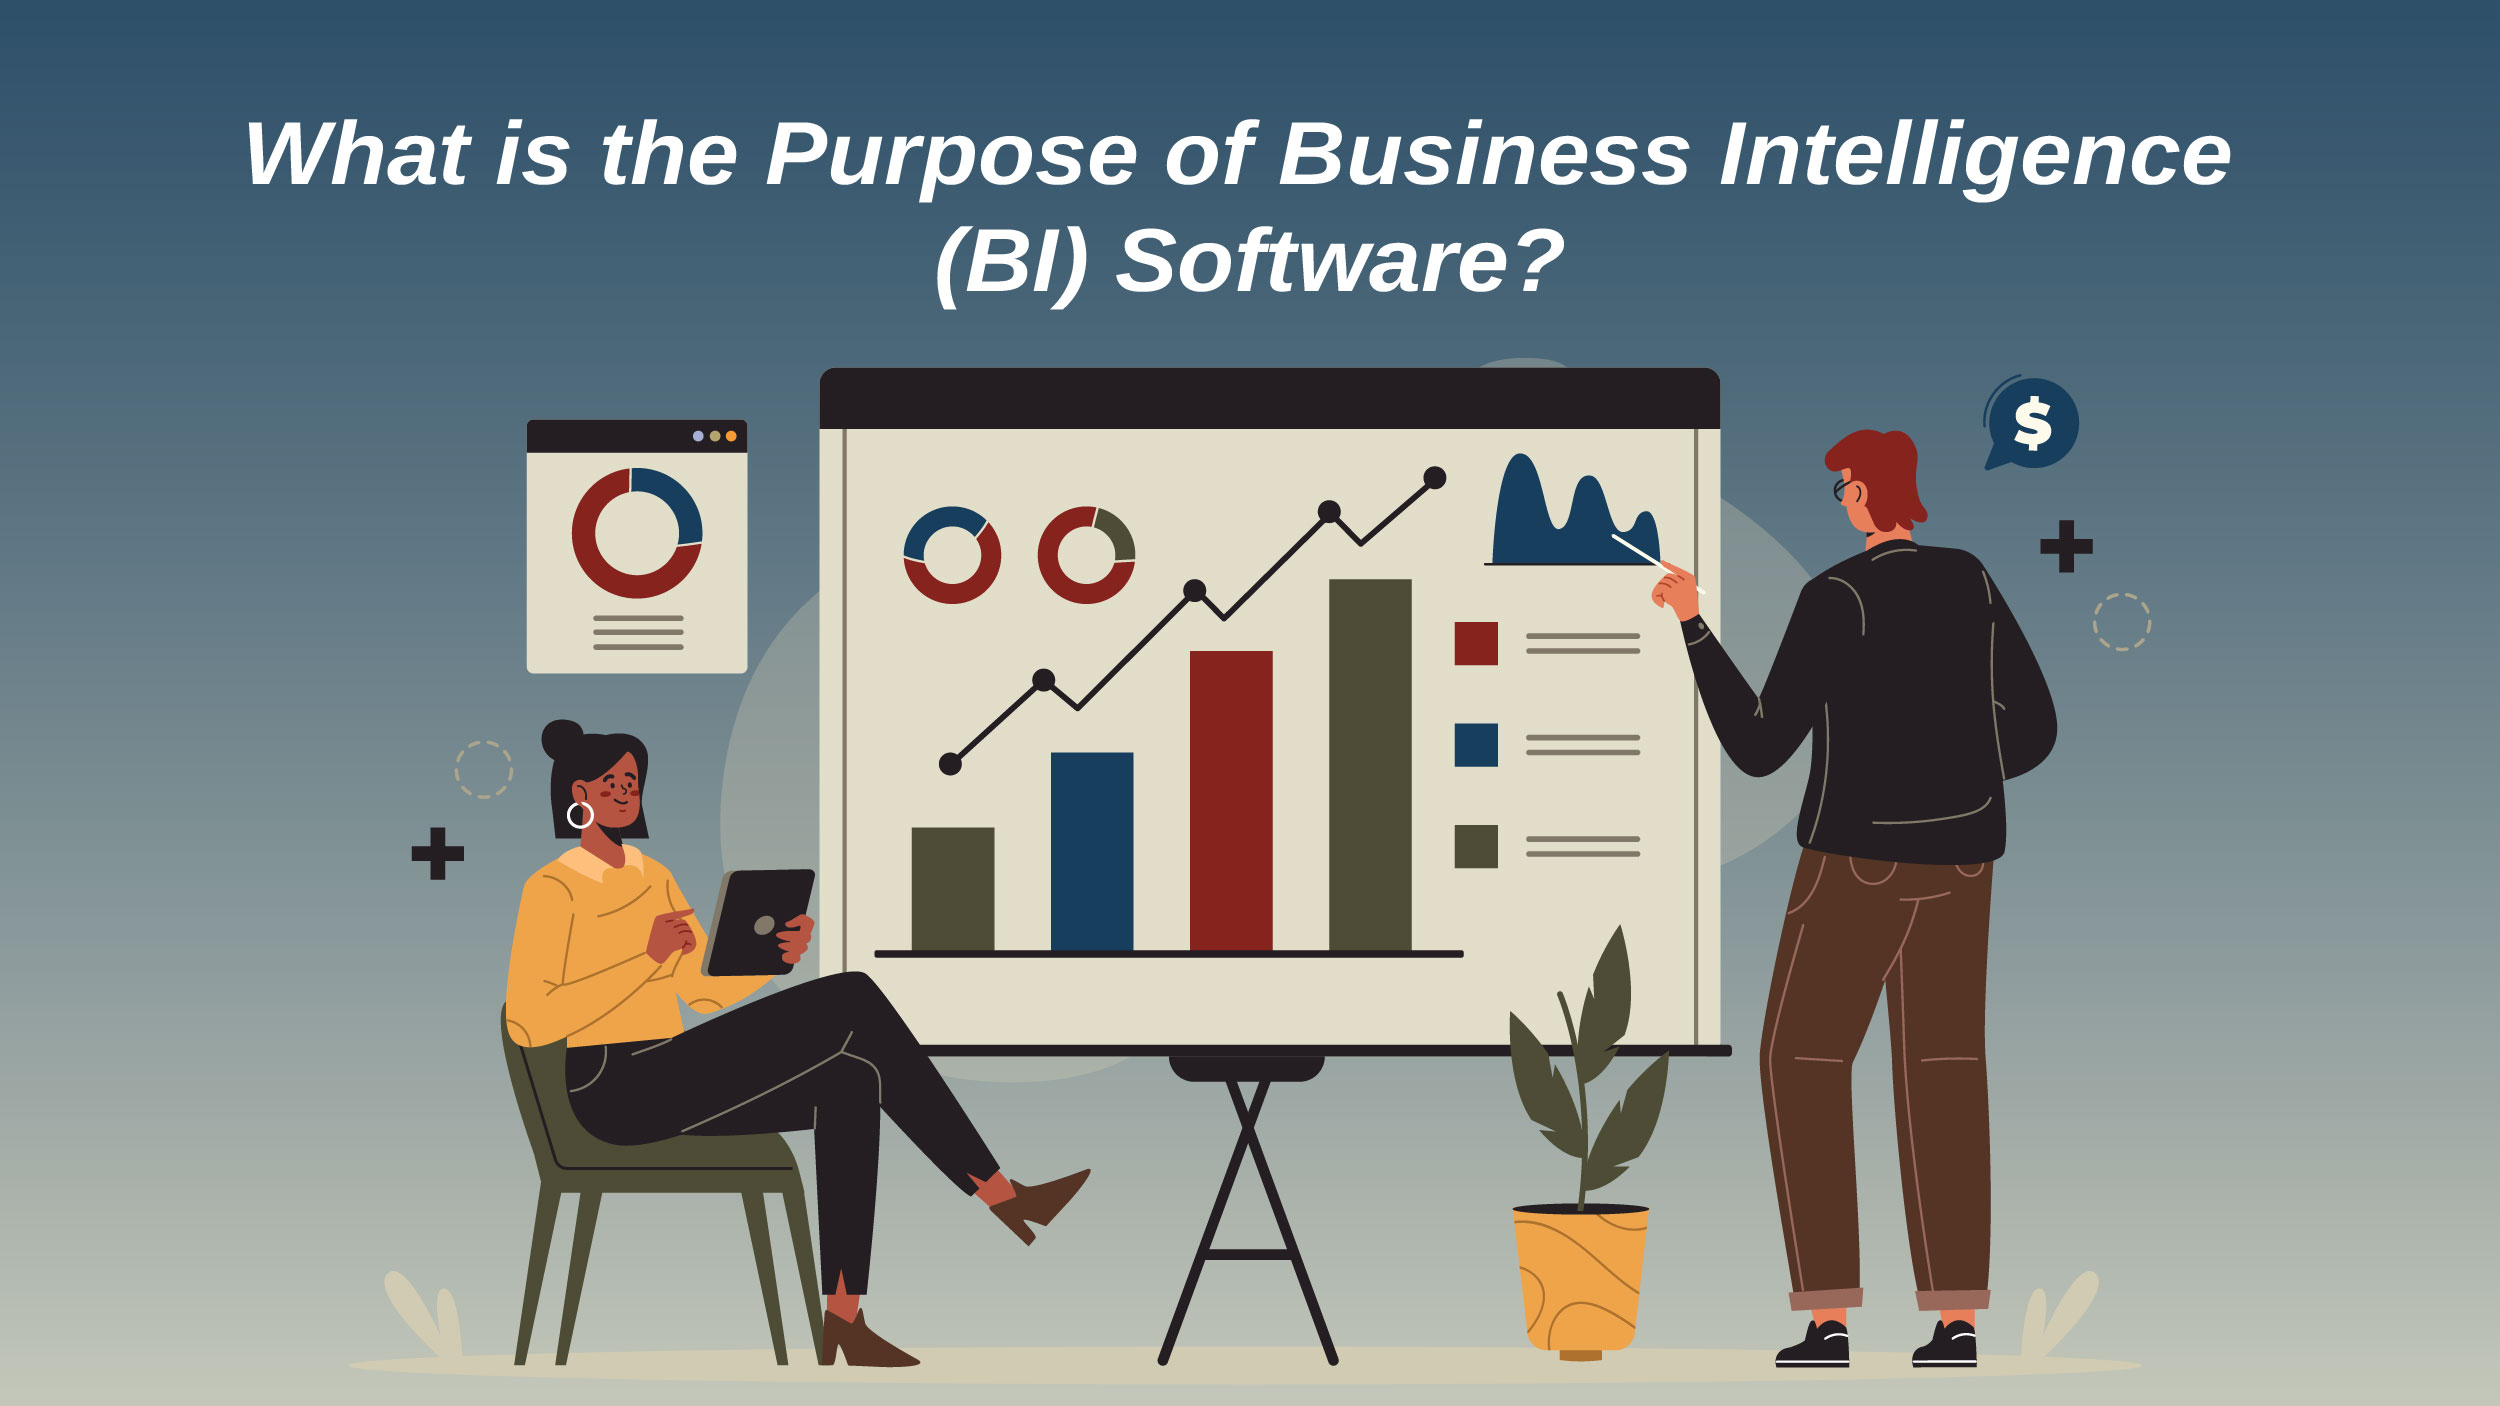 Best Business intelligence tools